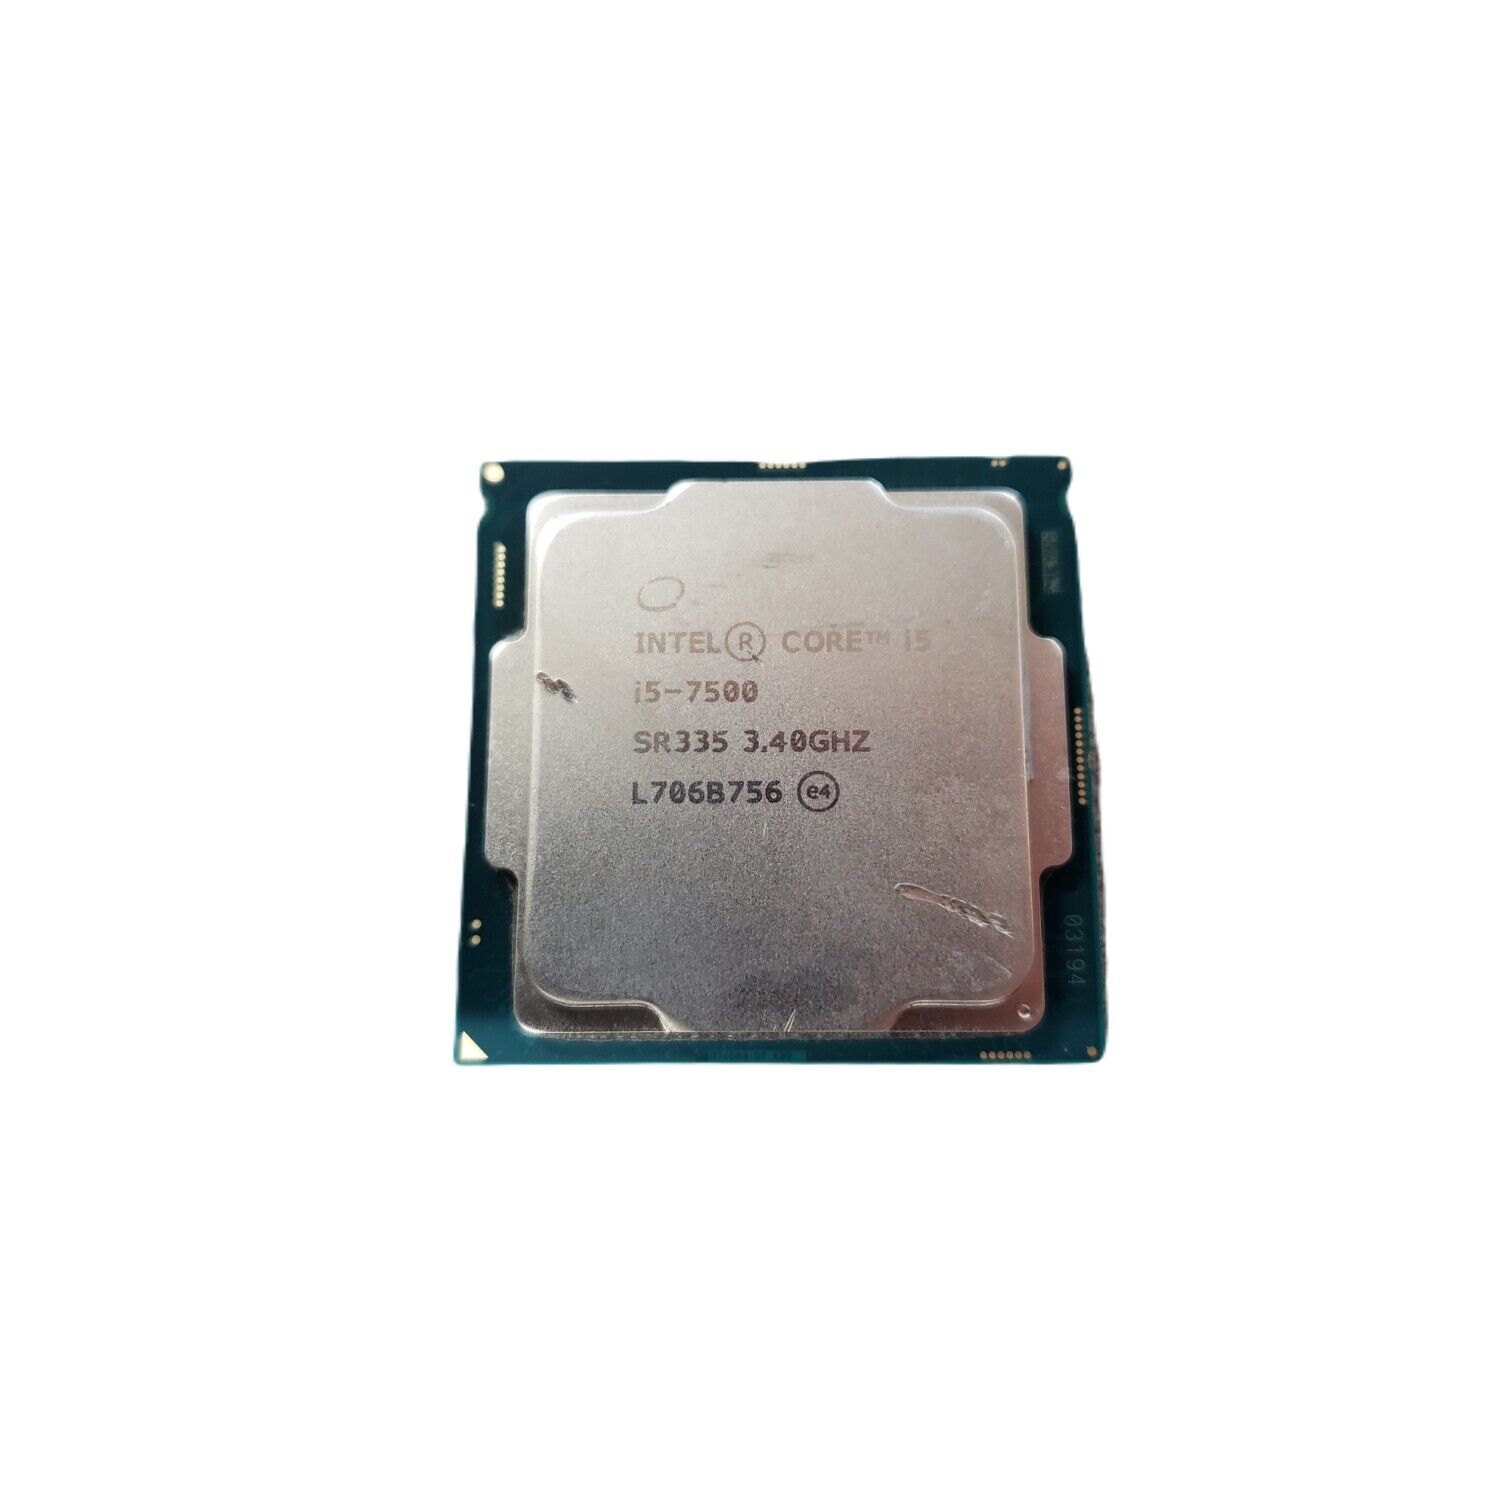 [ Lot Of 4 ] Intel i5-7500 SR335 3.40GHZ Processor